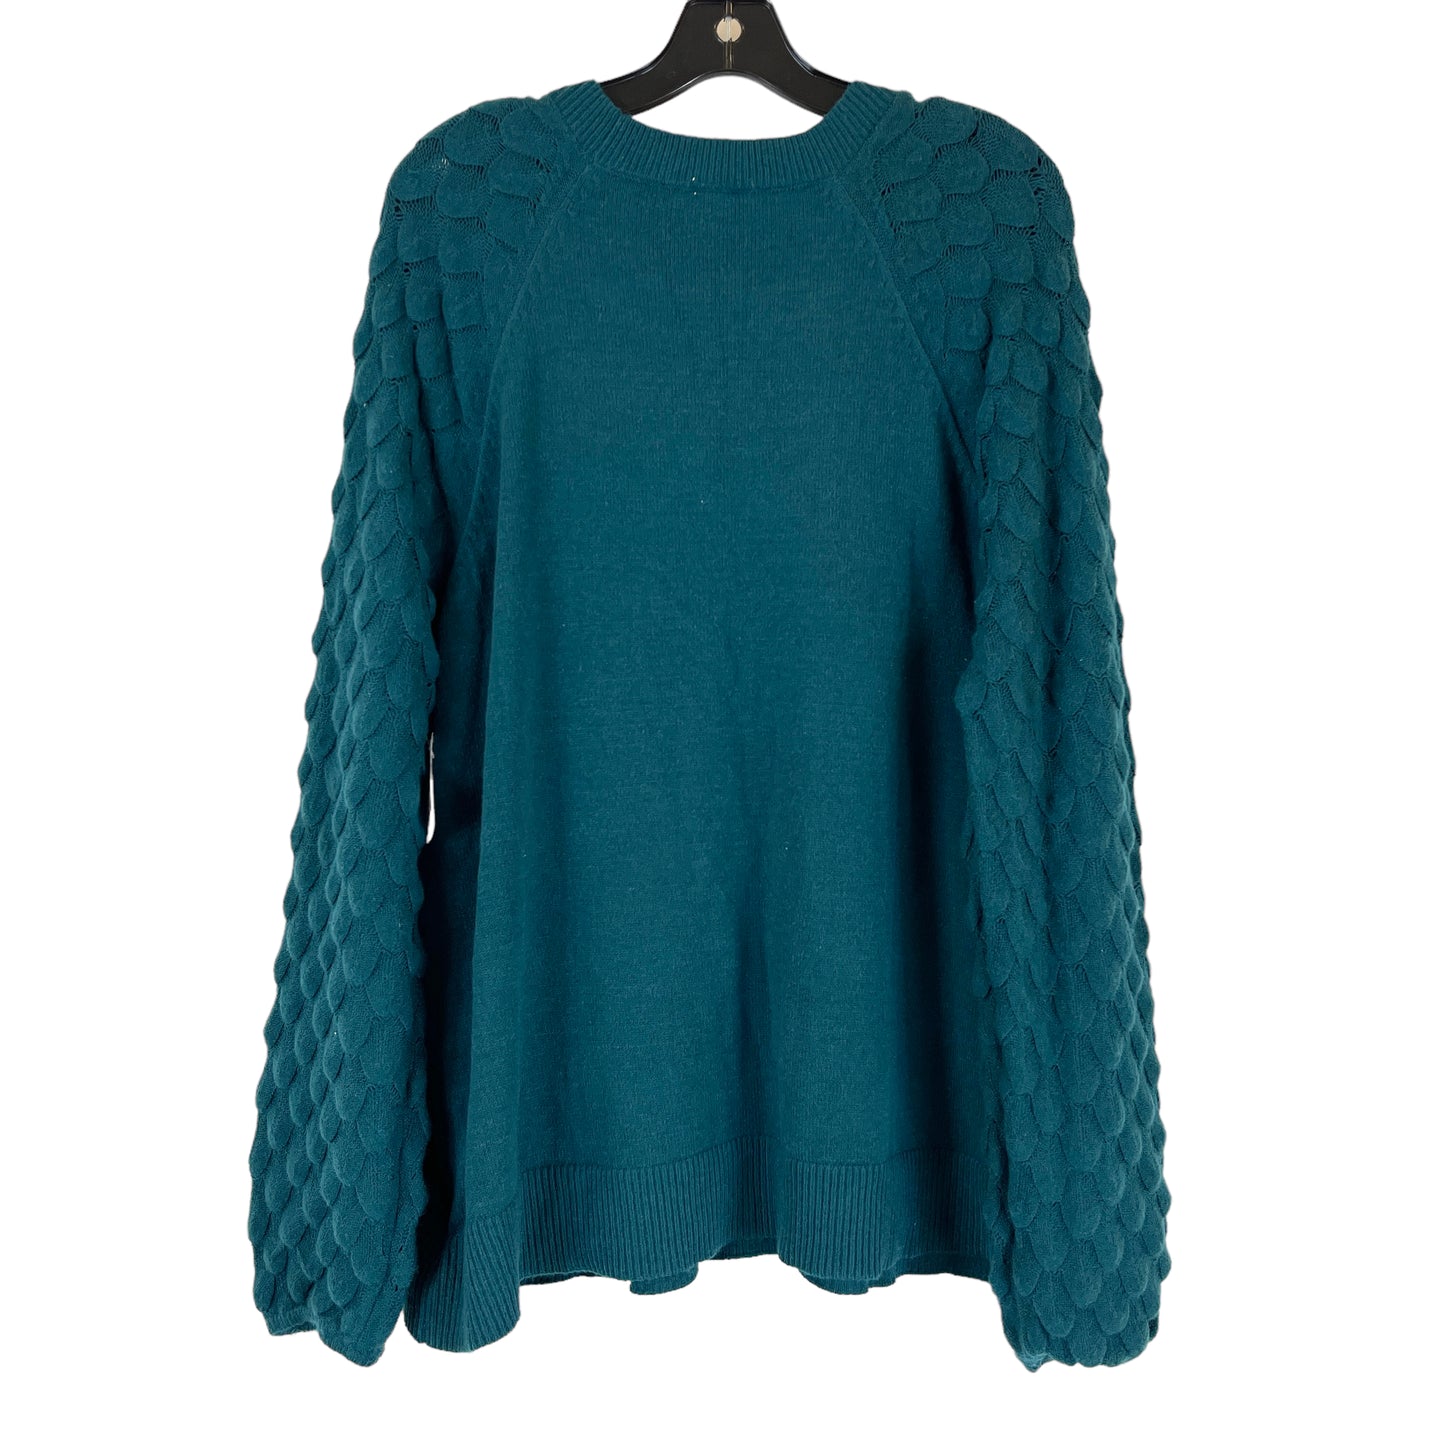 Sweater By Lane Bryant  Size: 2X  | 18/20